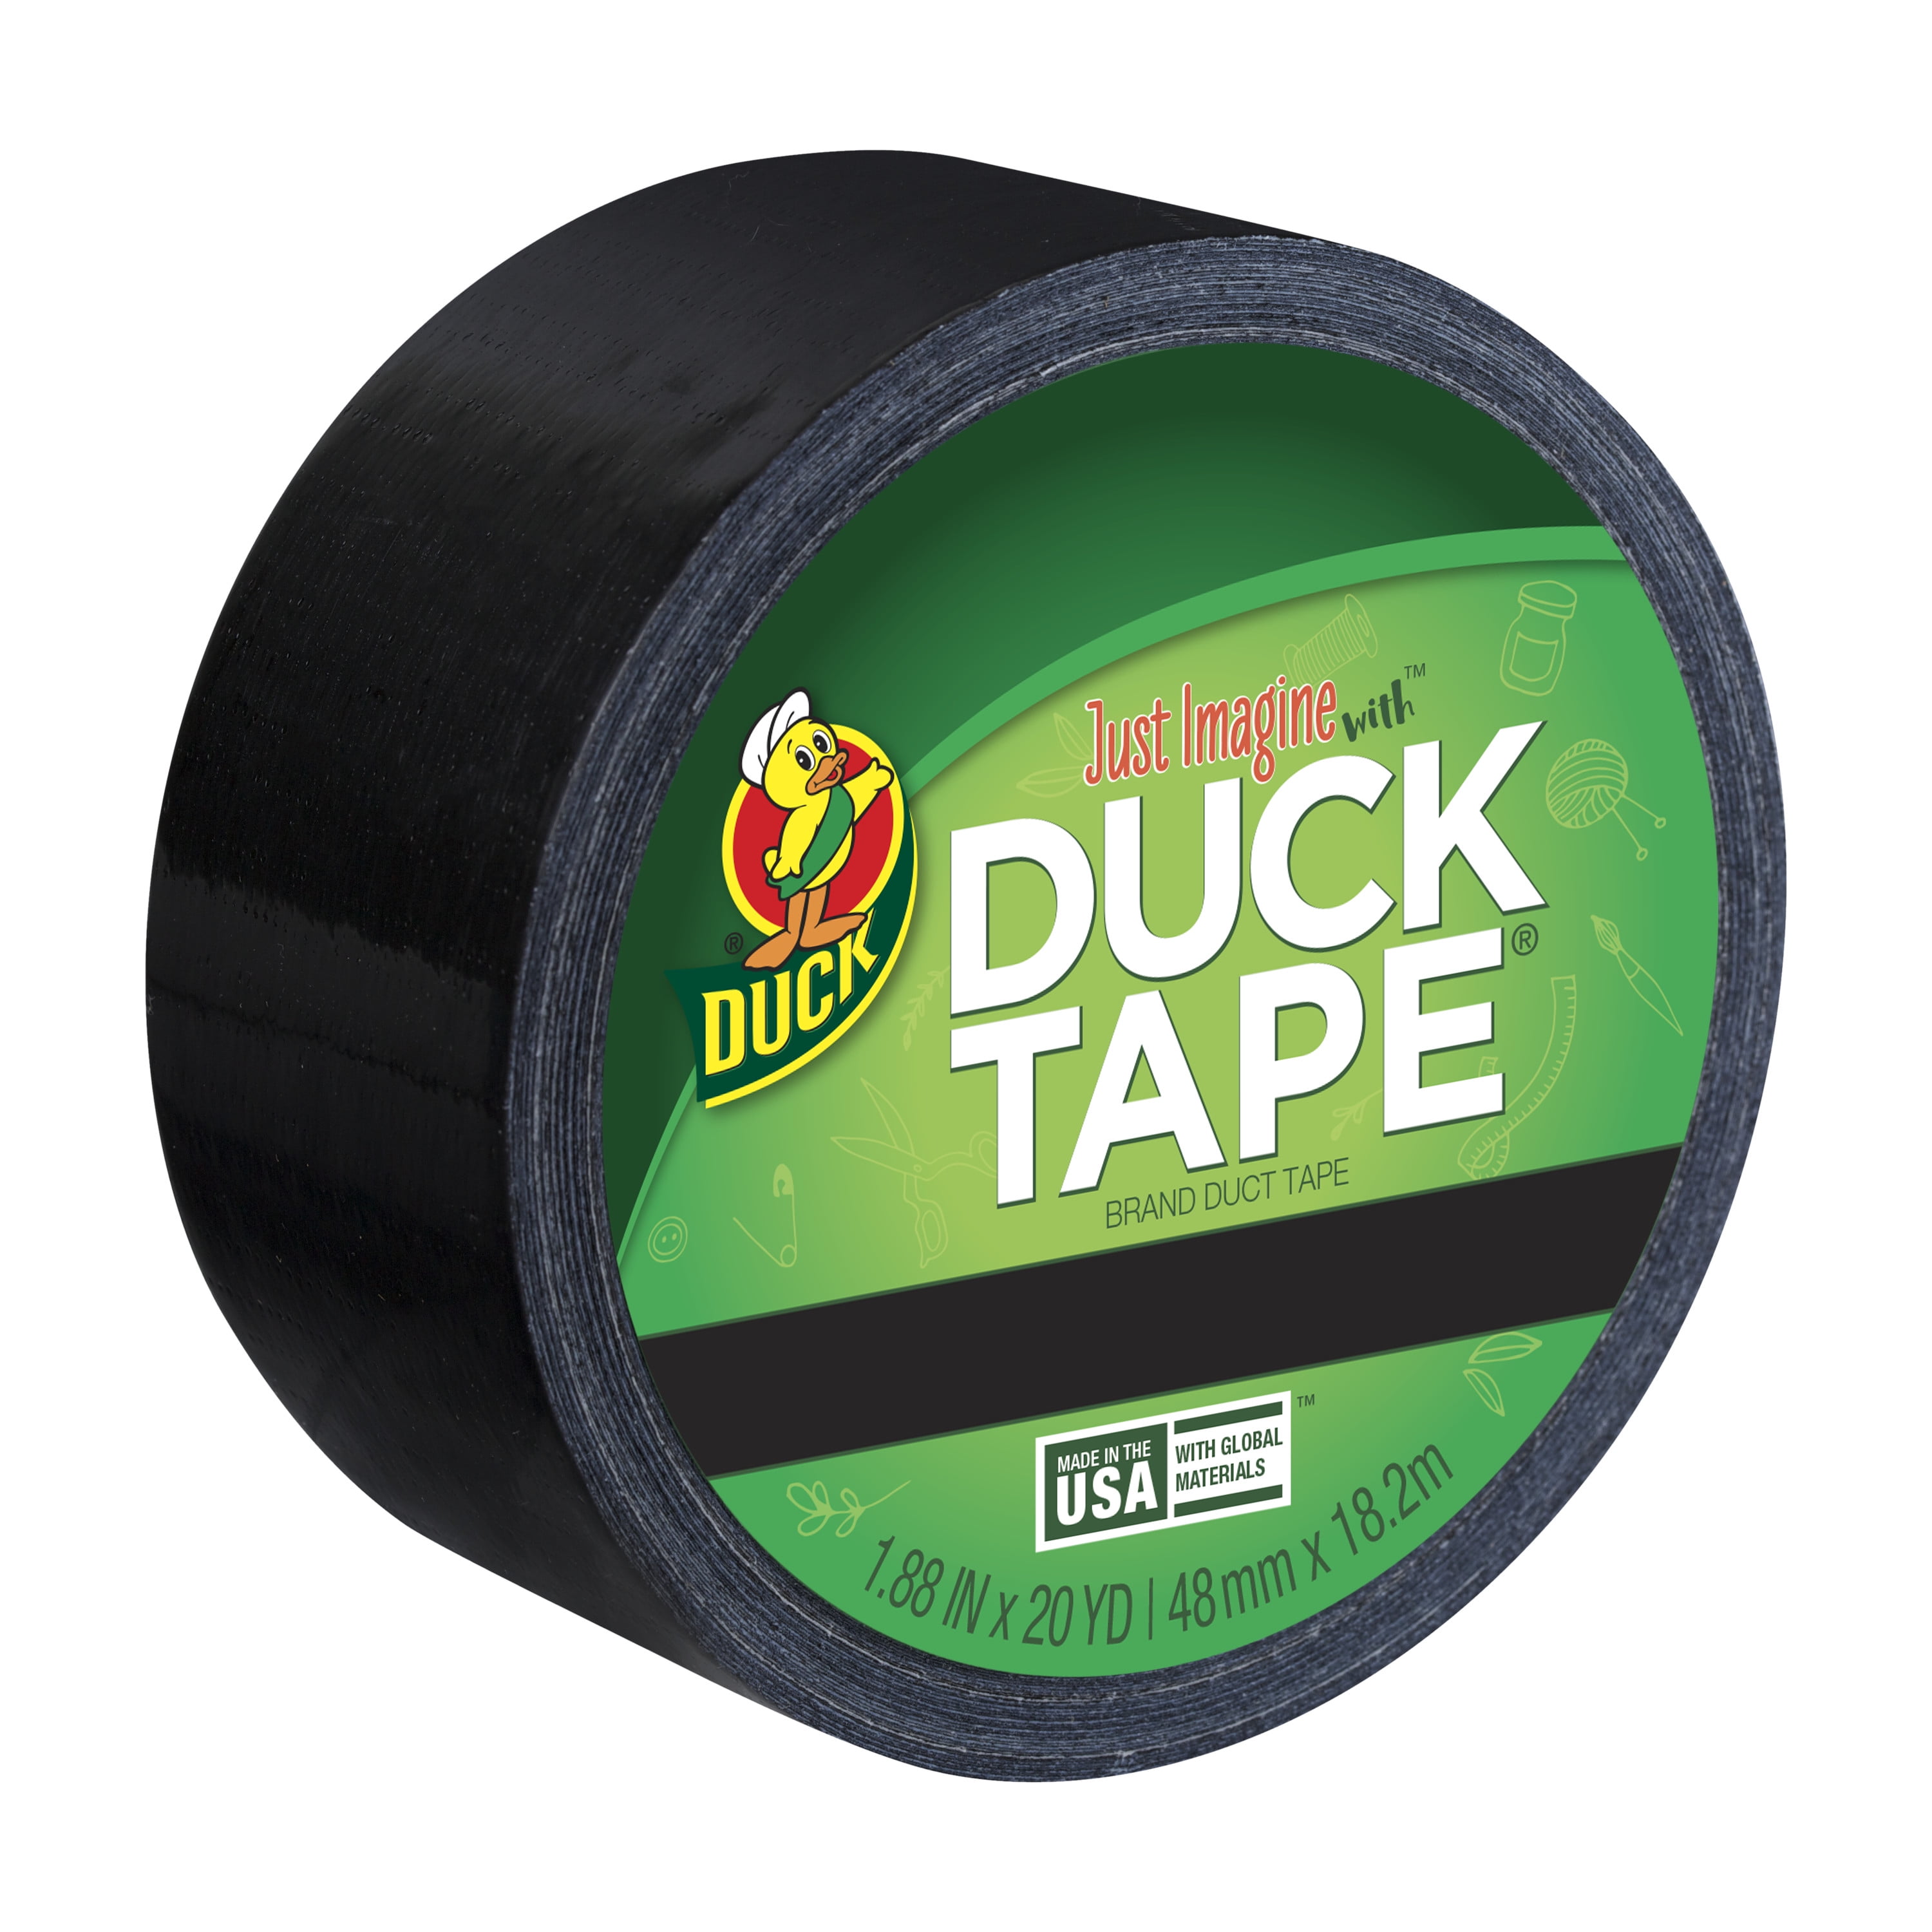 Duck Brand 1.88 in. x 20 yd. Tape - Walmart.com